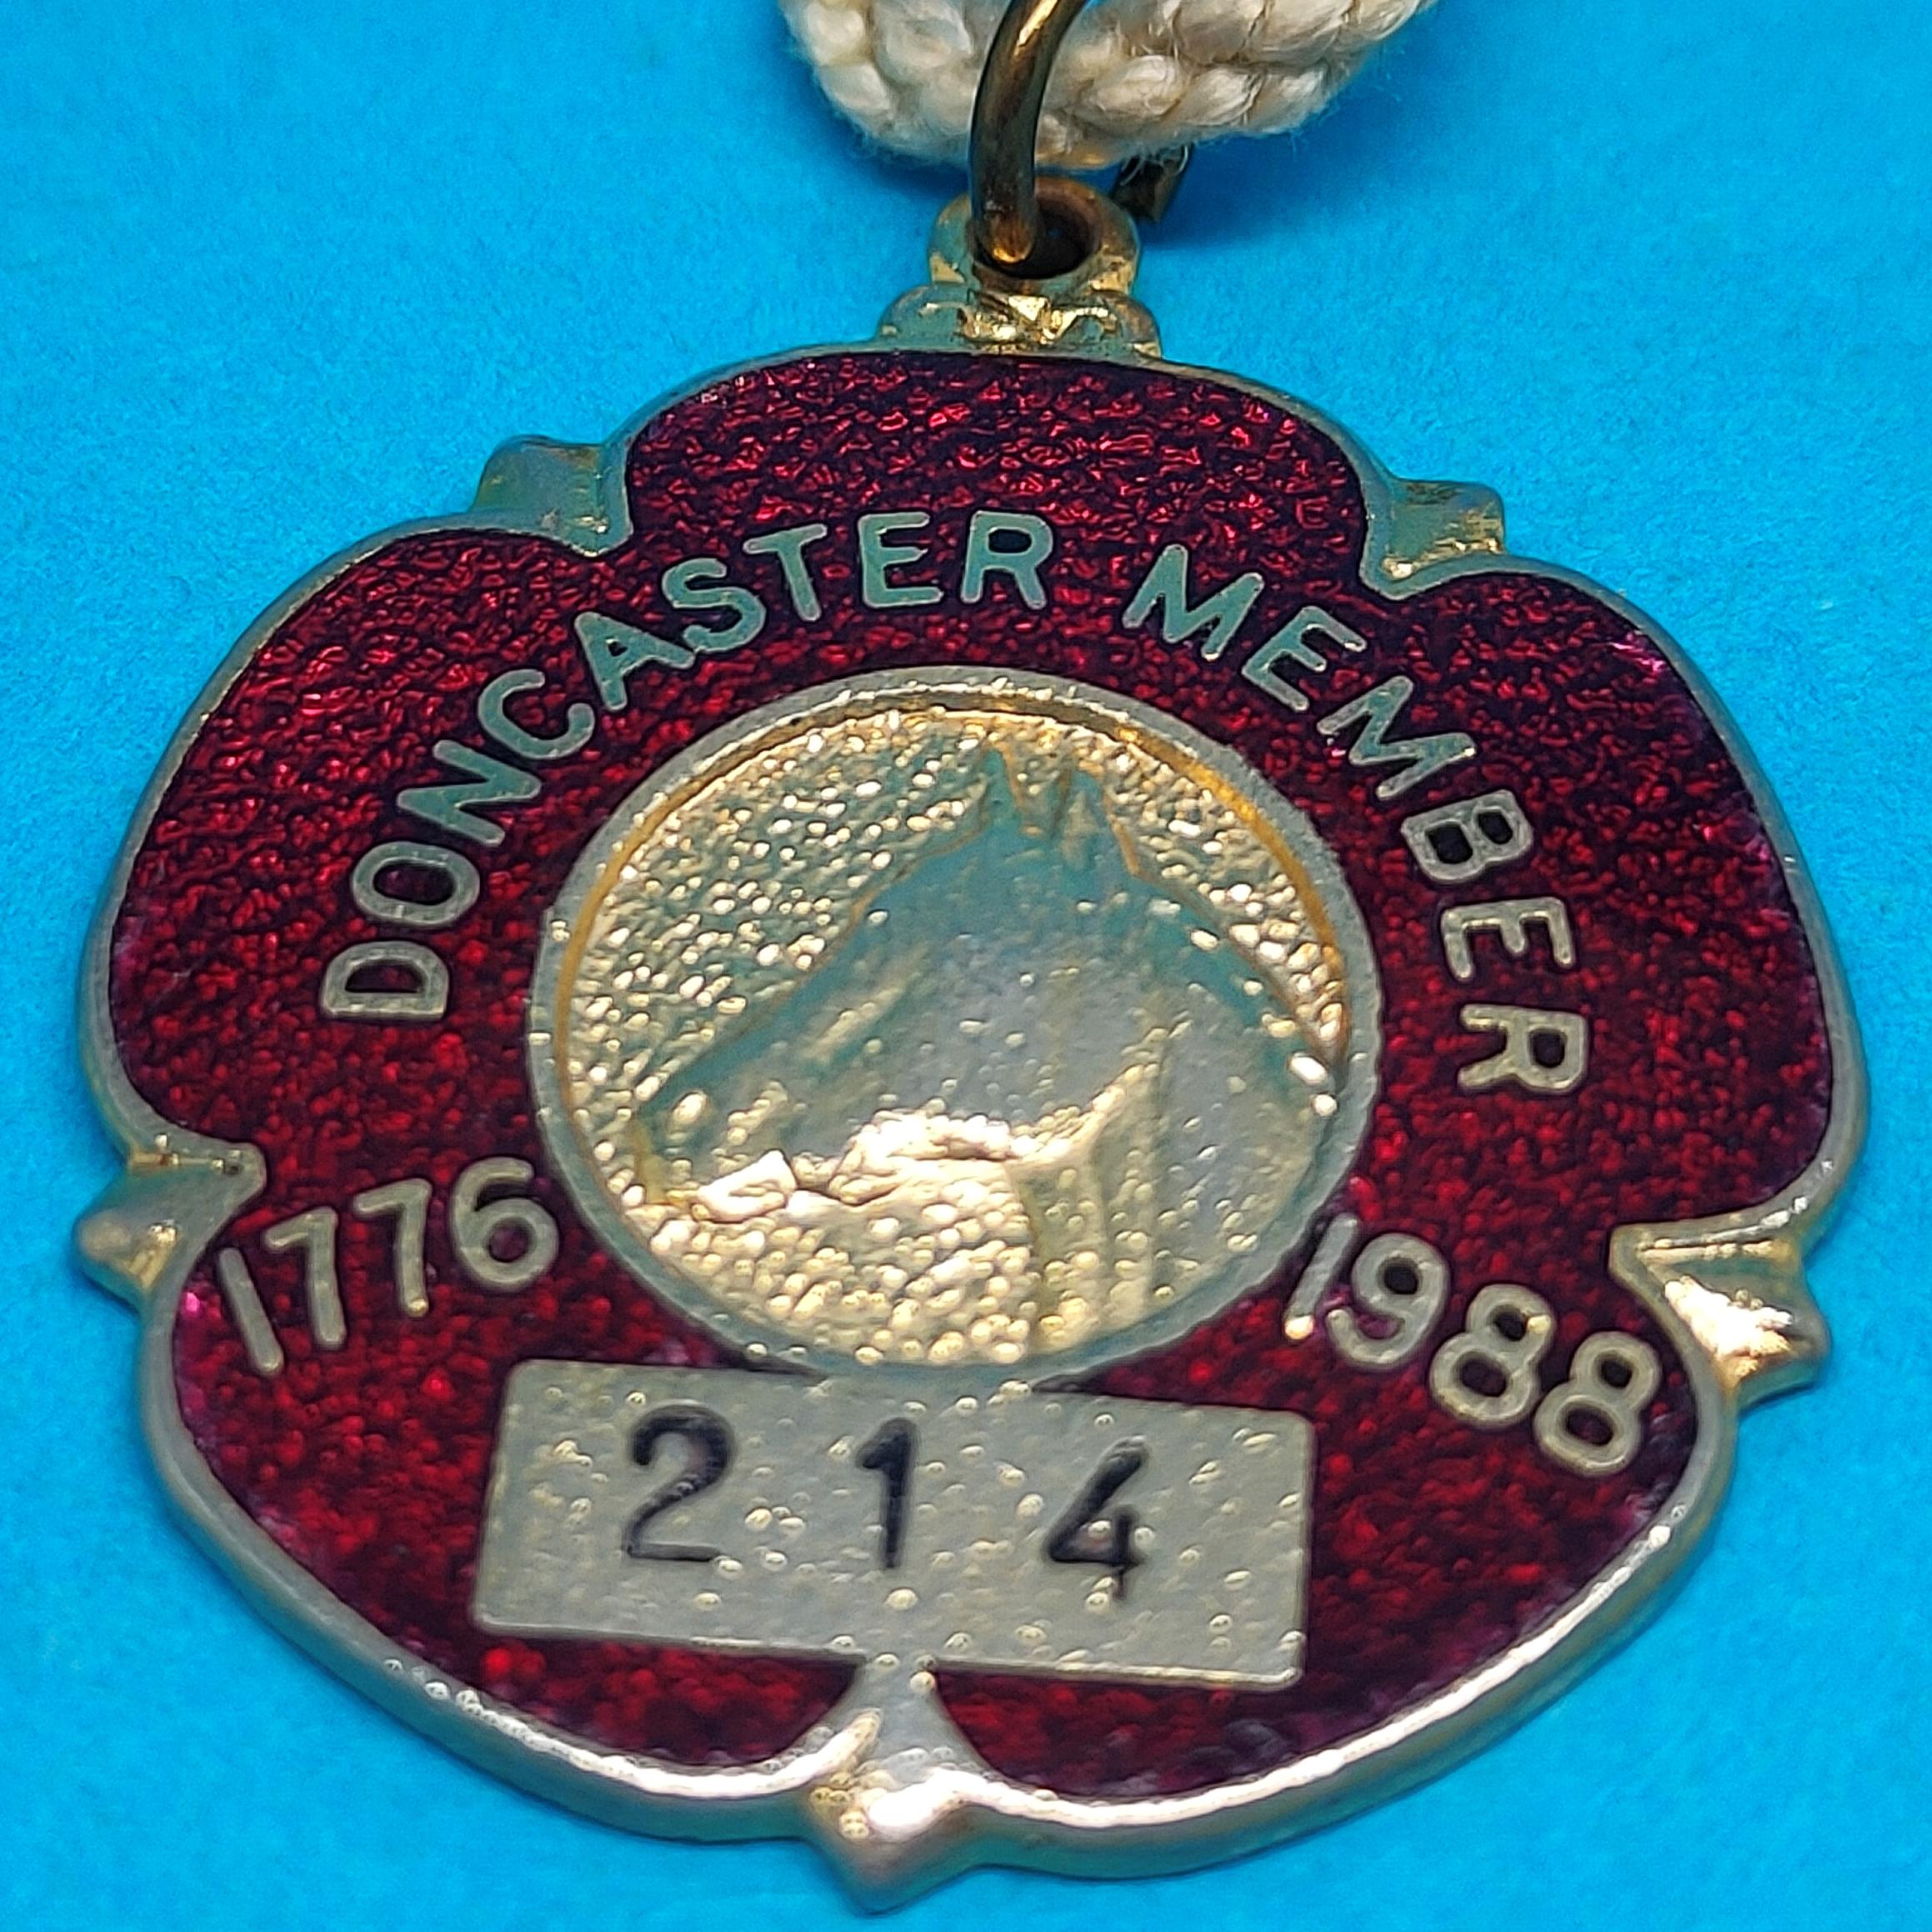 Doncaster 1988